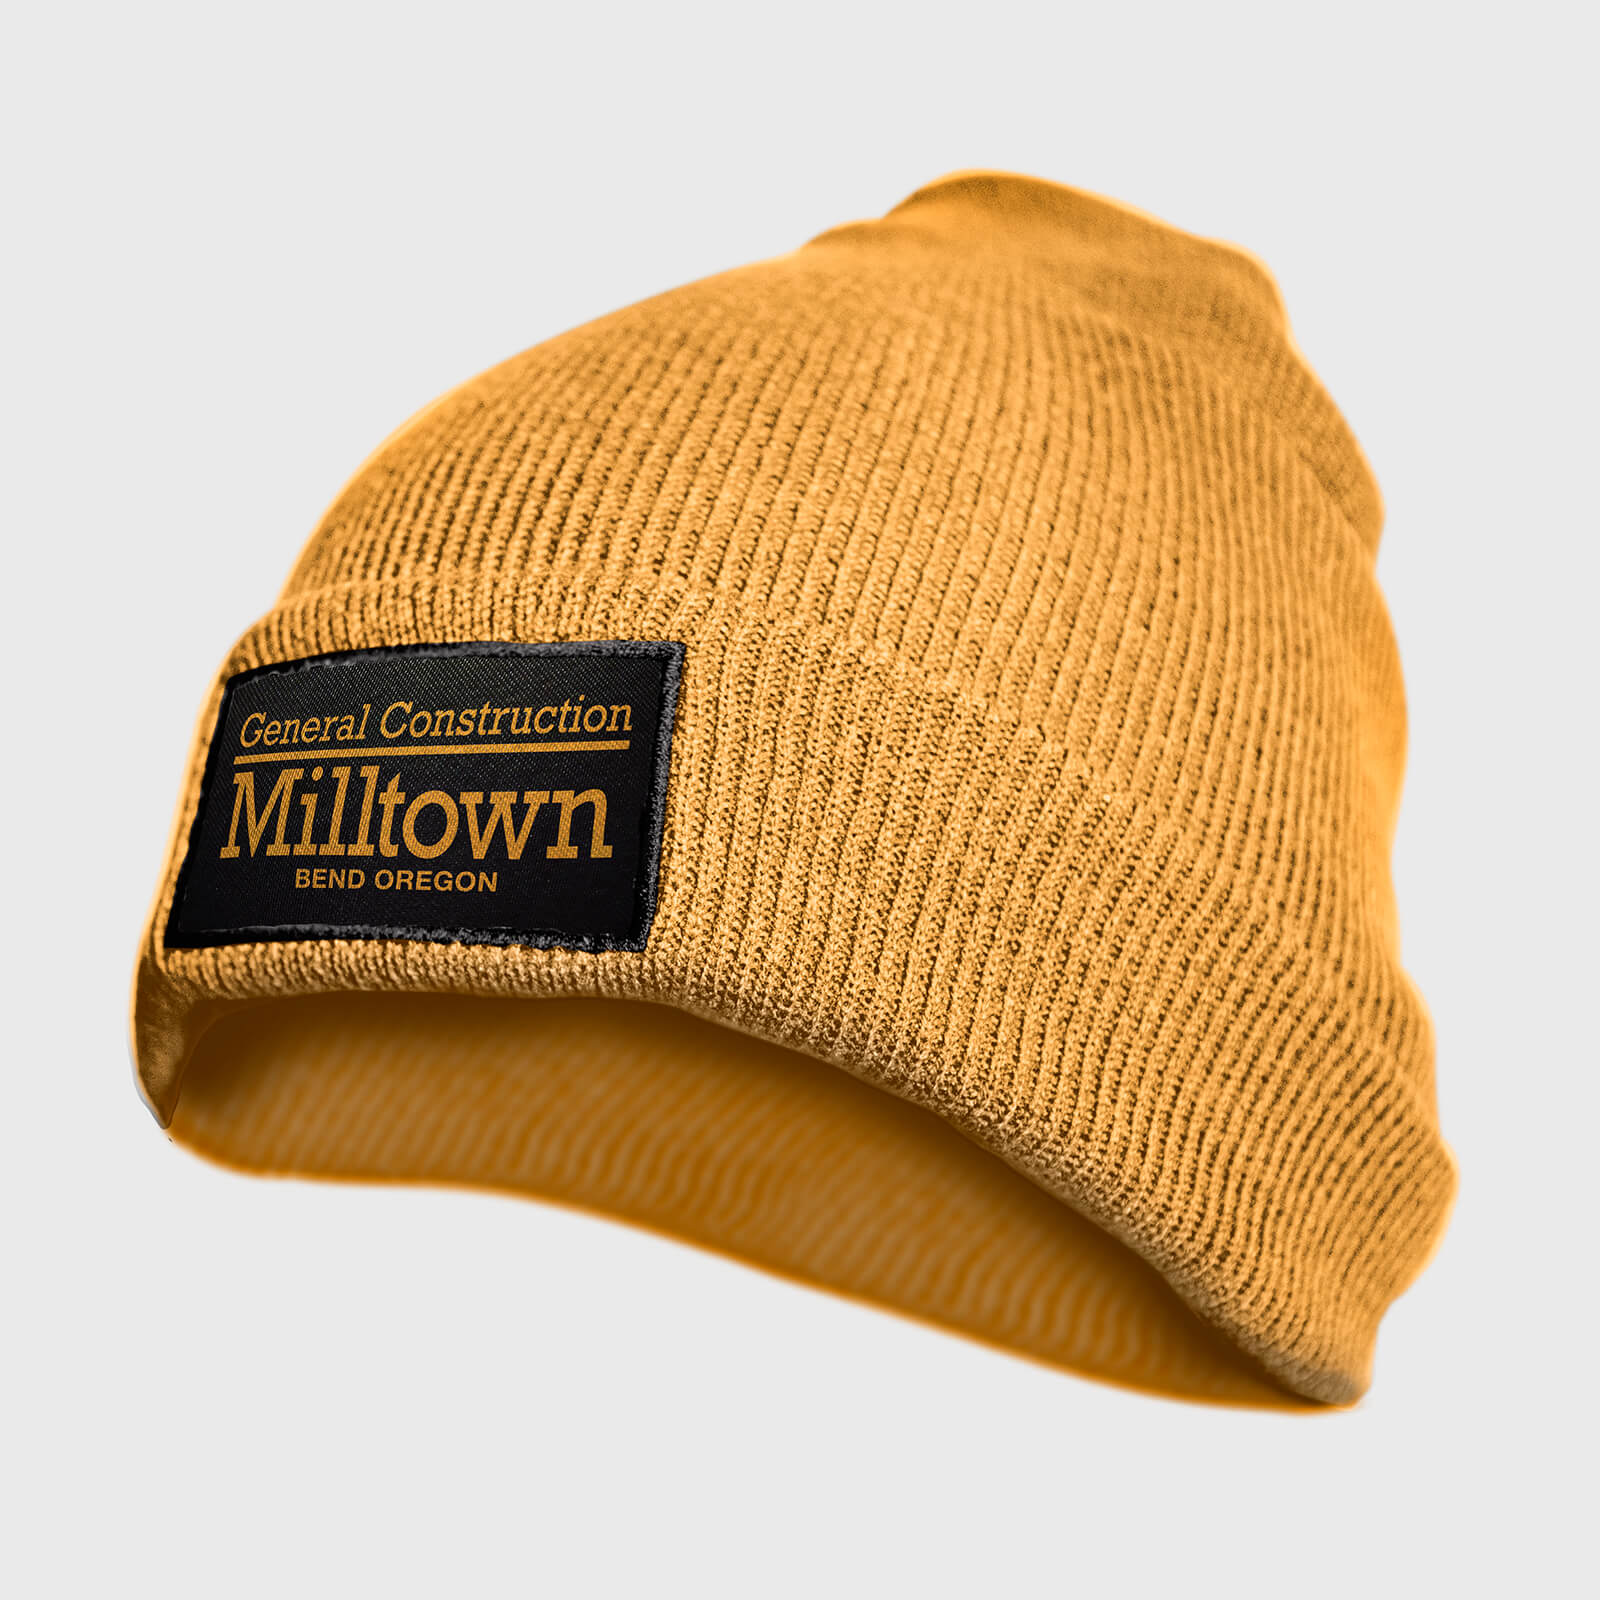 6-milltown-beanie-mockup-yellow